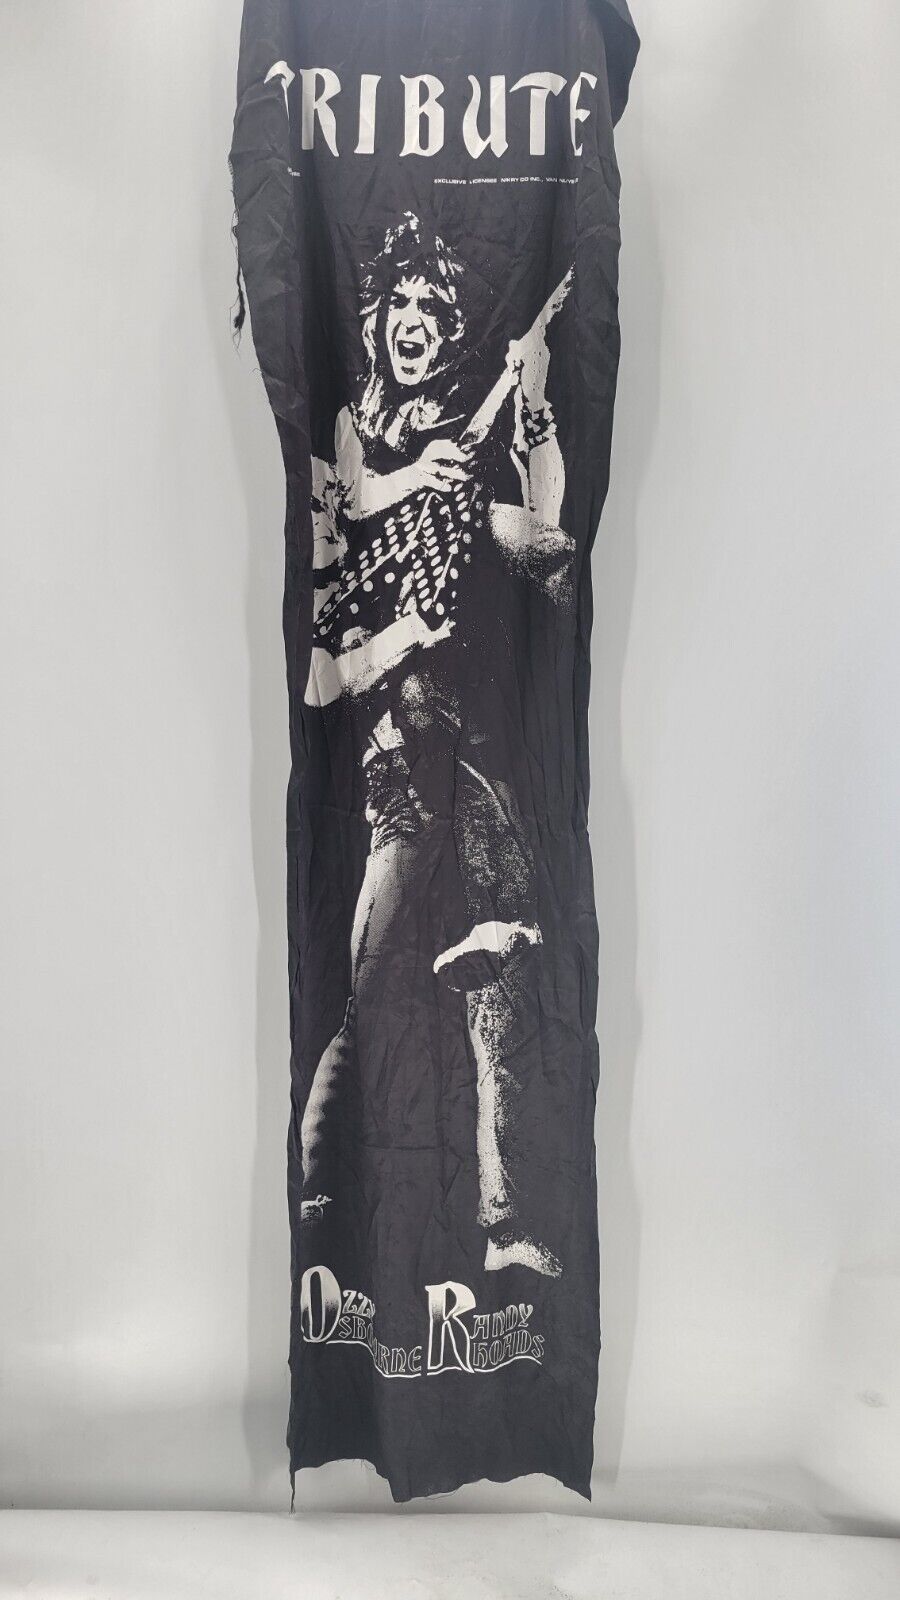 1988 Ozzy Osbourne Black Nikry Tribute Randy Rhoads Vintage Tapestry